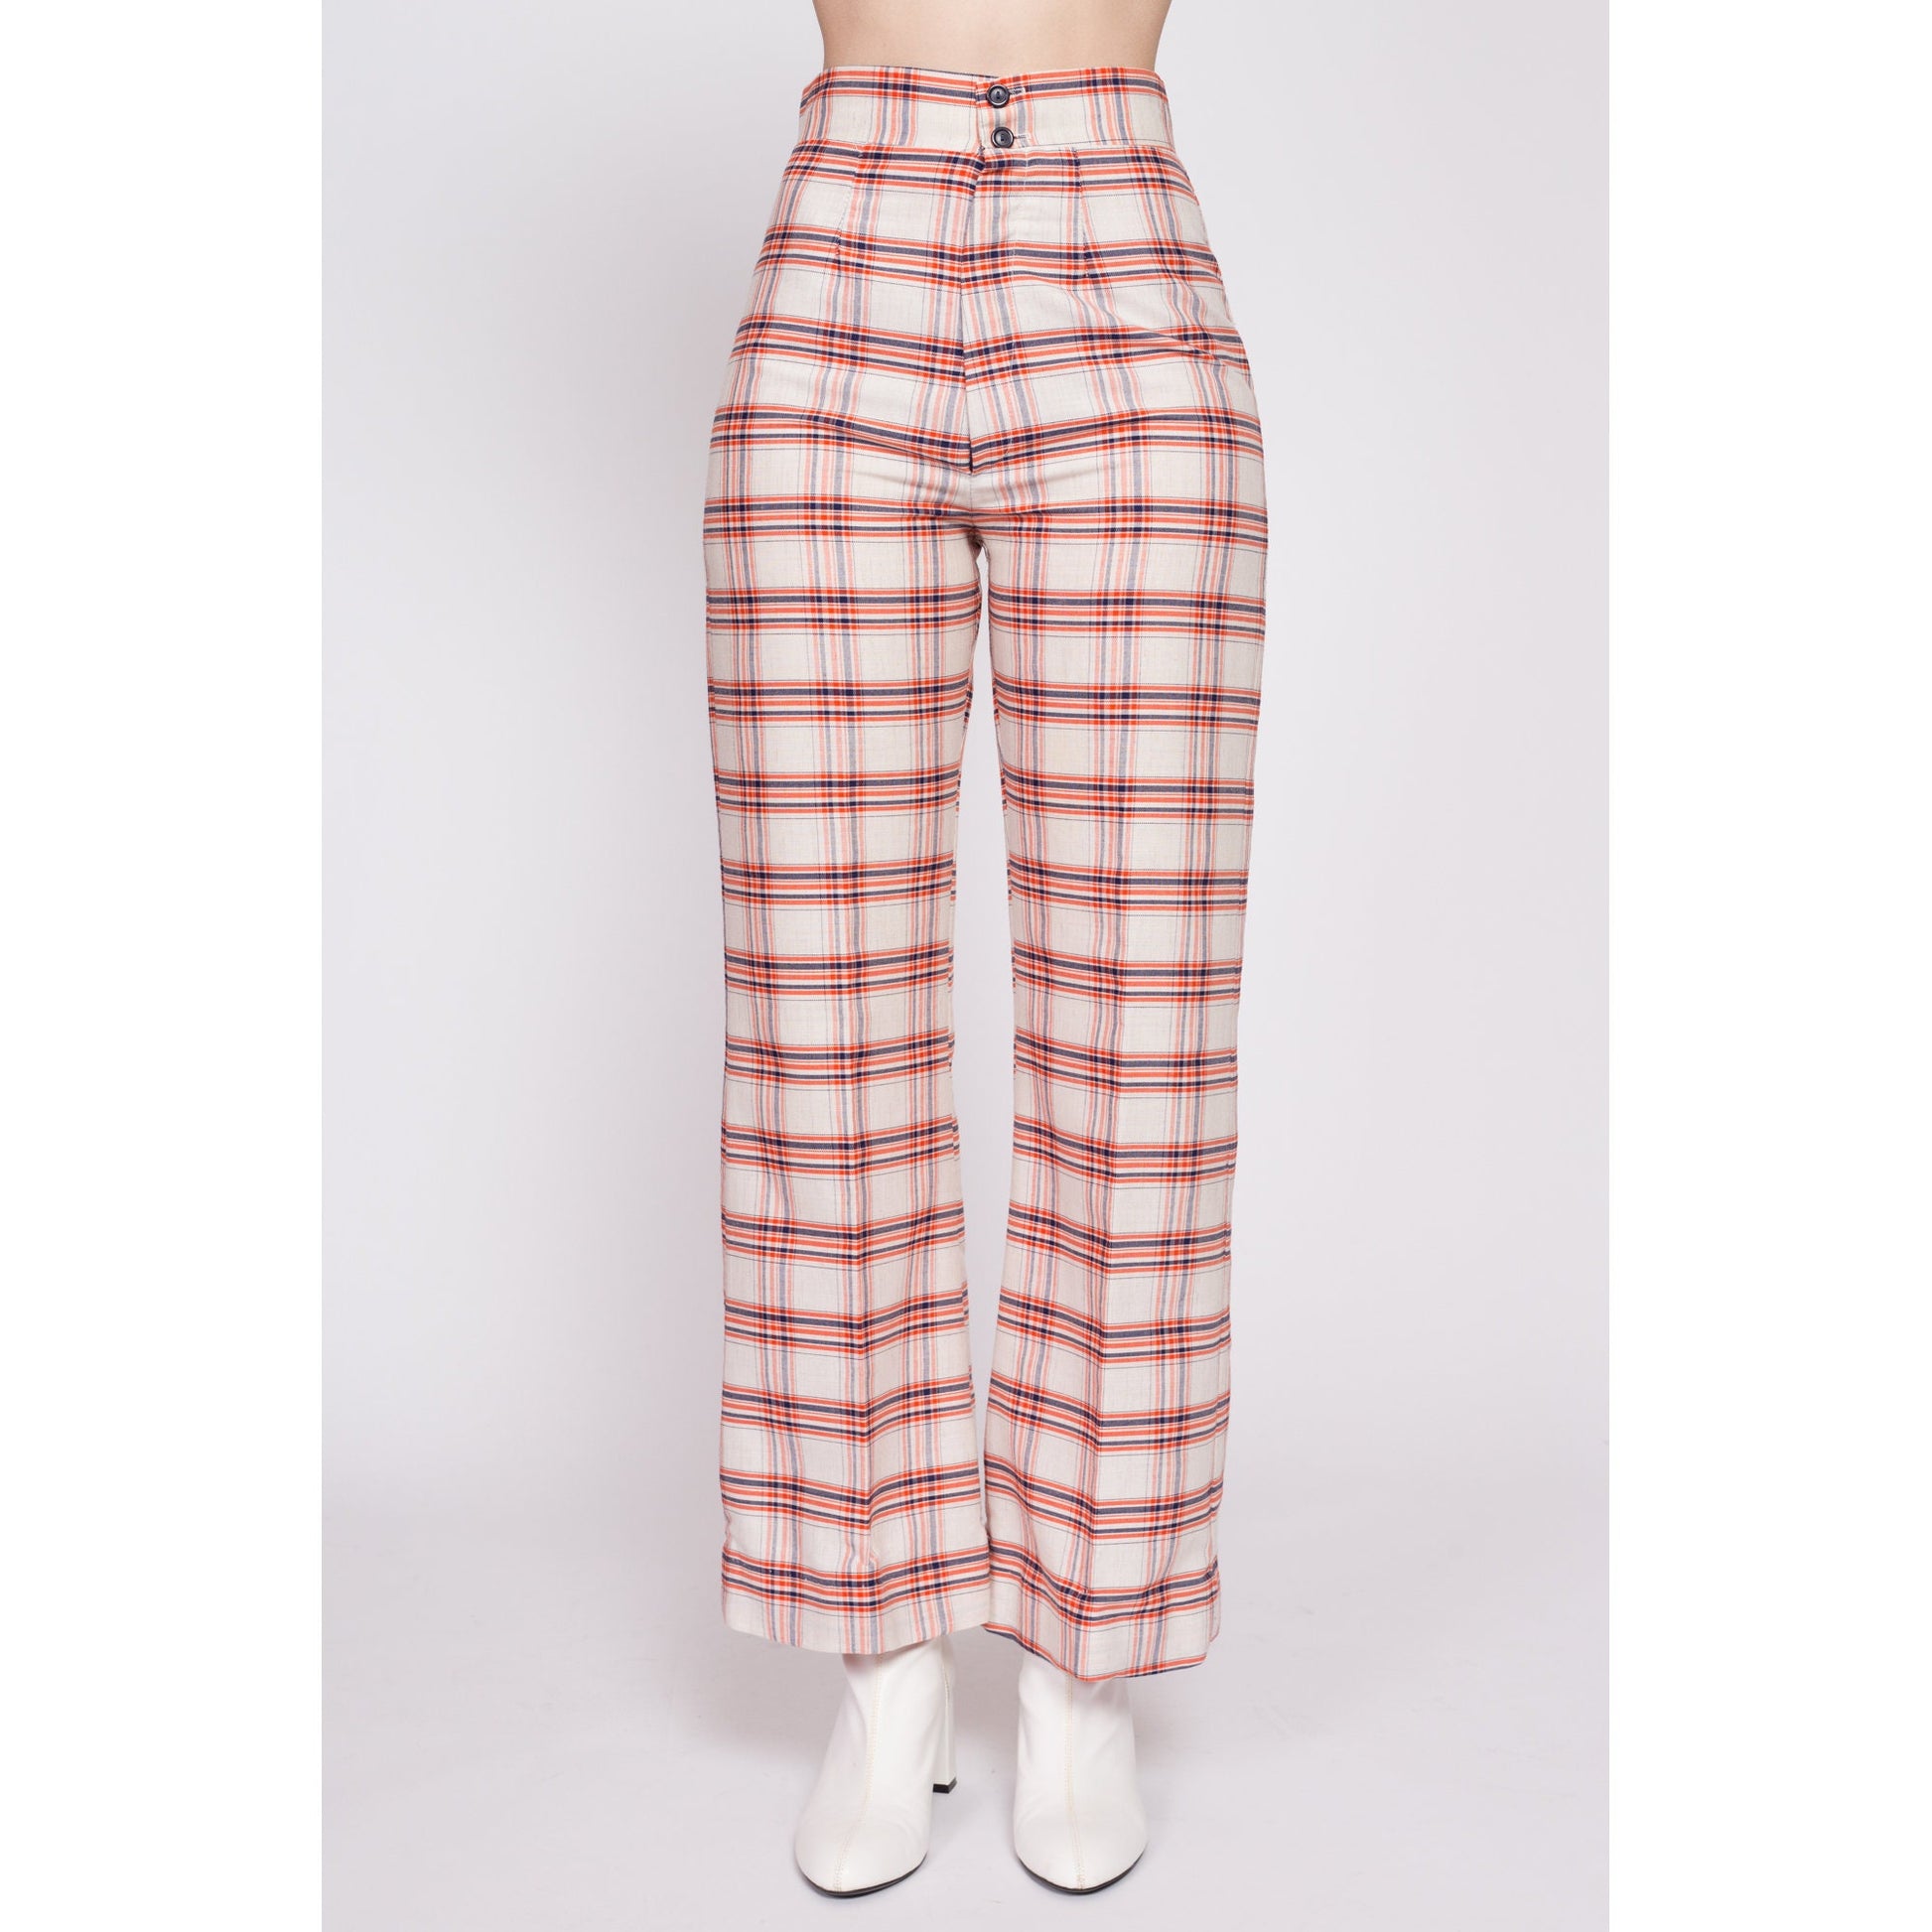 70s Checkered Geometric Print Pants - Small to Medium – Flying Apple Vintage